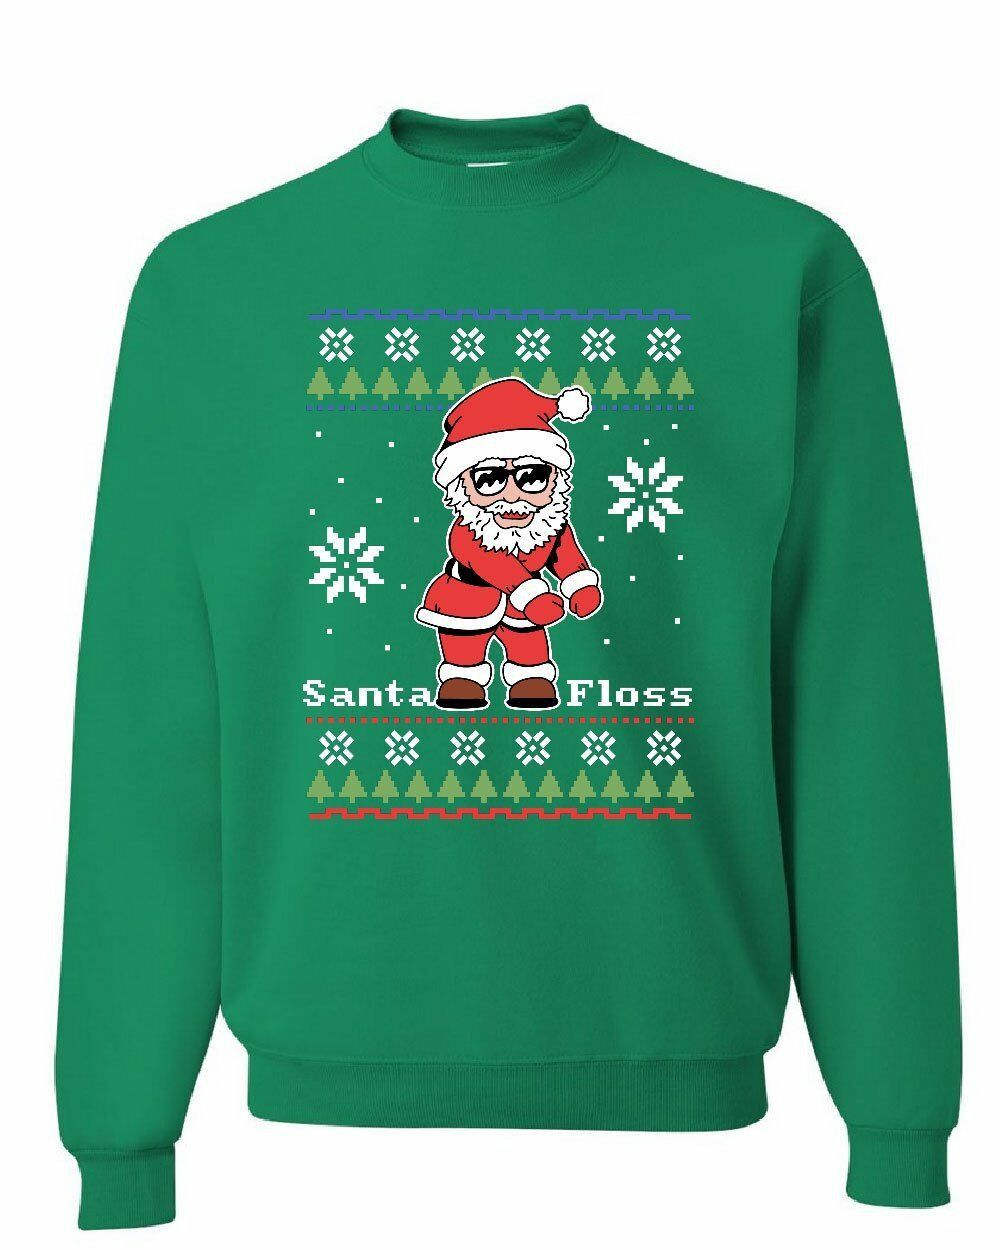 Santa Floss Merry Christmas Snowflakes Style: Sweatshirt, Color: Green